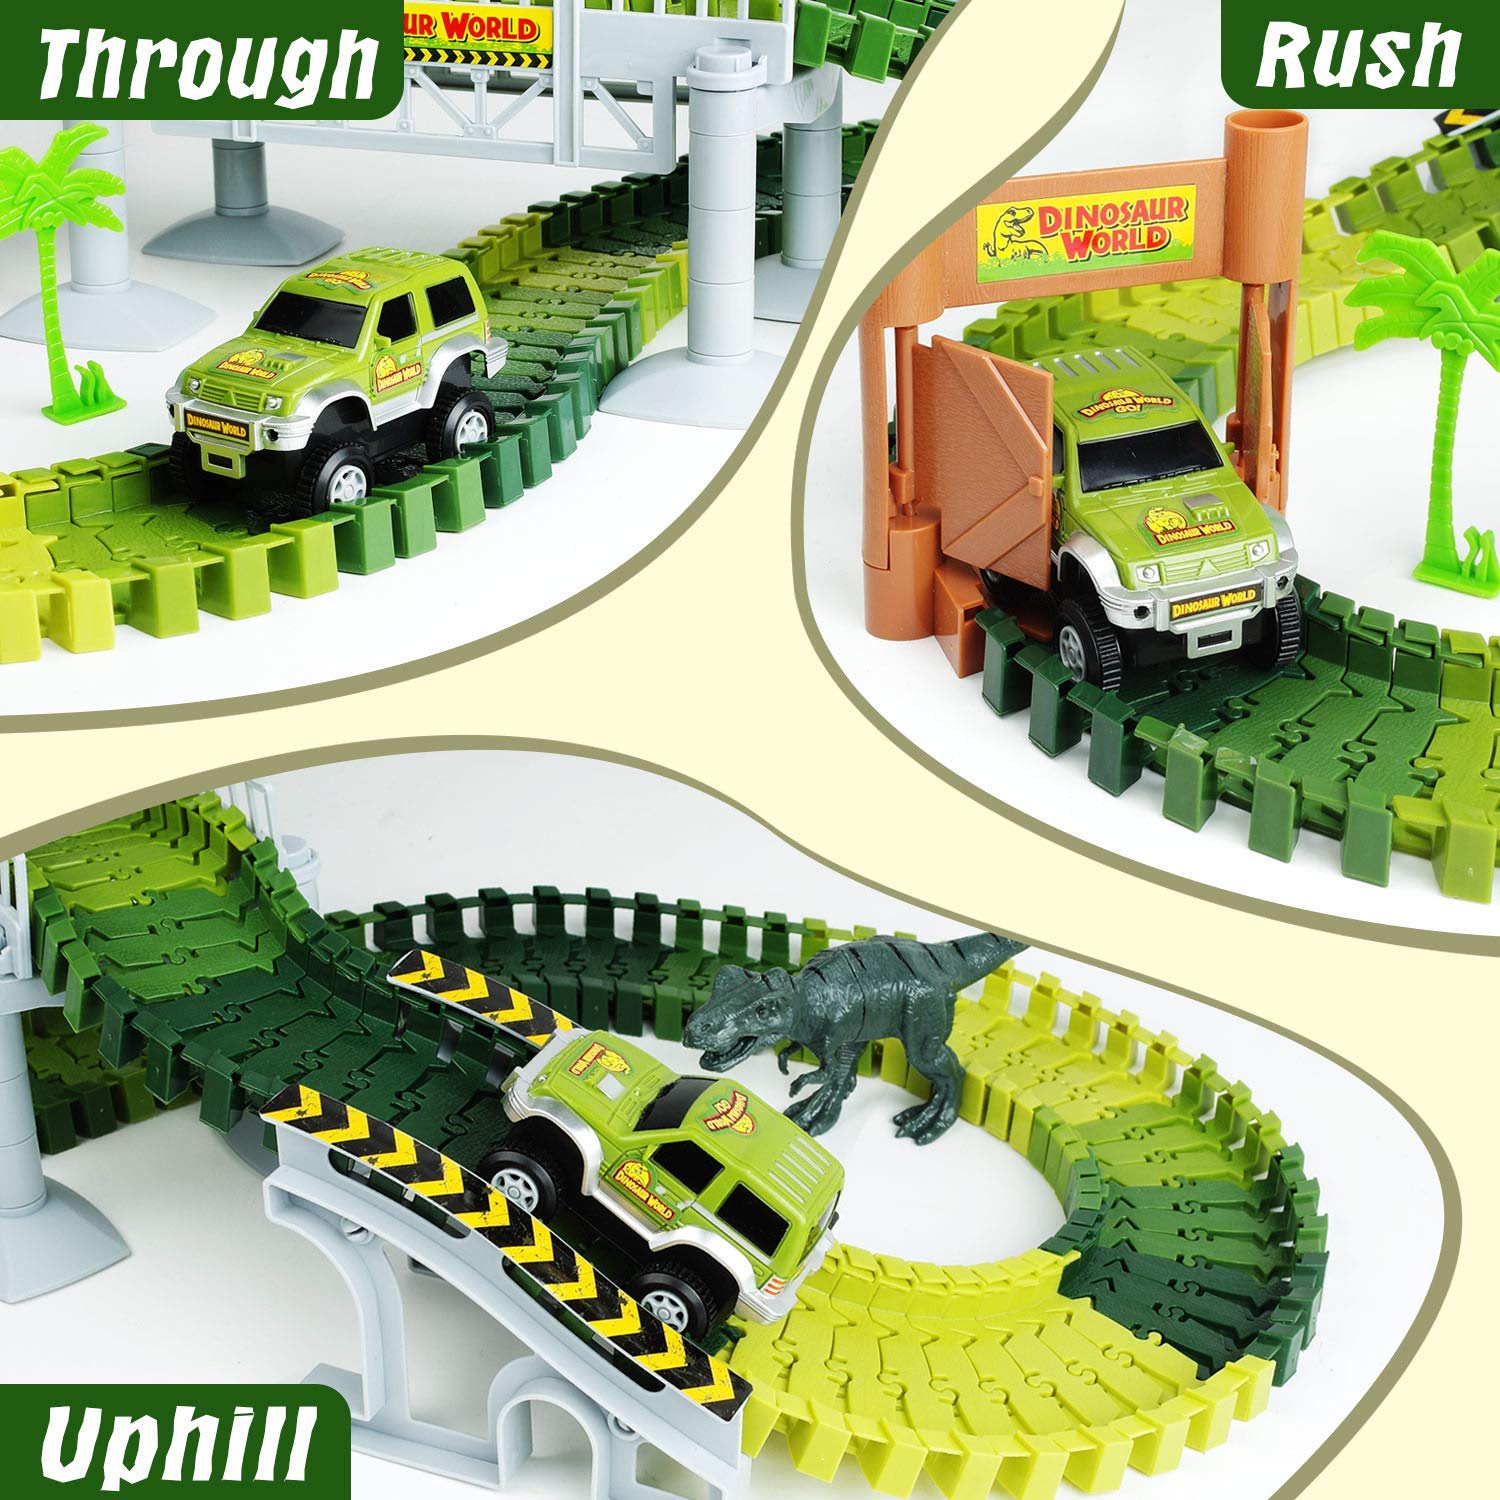 AUUGUU Kids Dinosaur Race Car Track with Flexible Track, Dino Toys, Bridge, Ramps and 2 Race Car Toys – Prehistoric Race Track for Kids Age 3-5